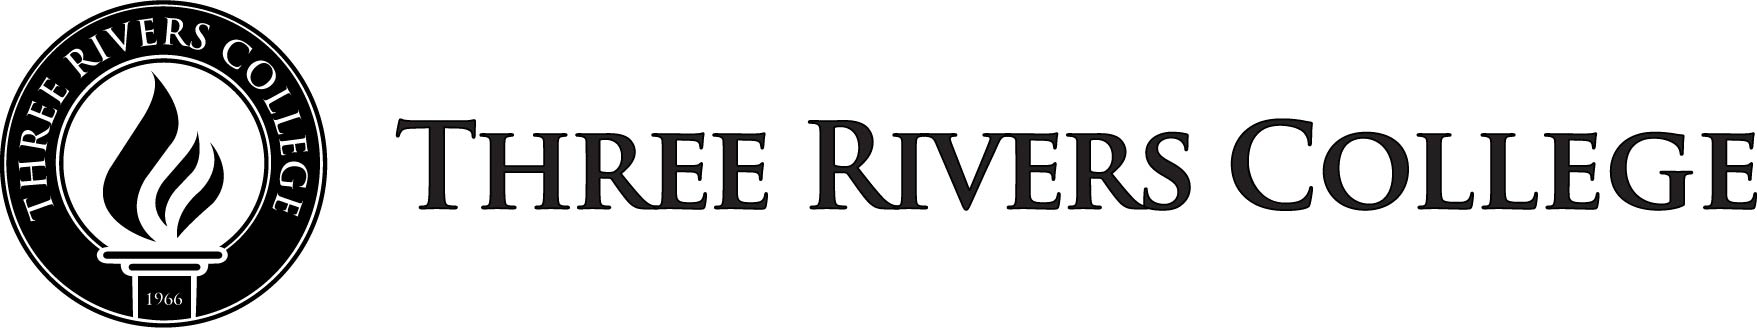 Three Rivers Logo -Black & White Horizontal